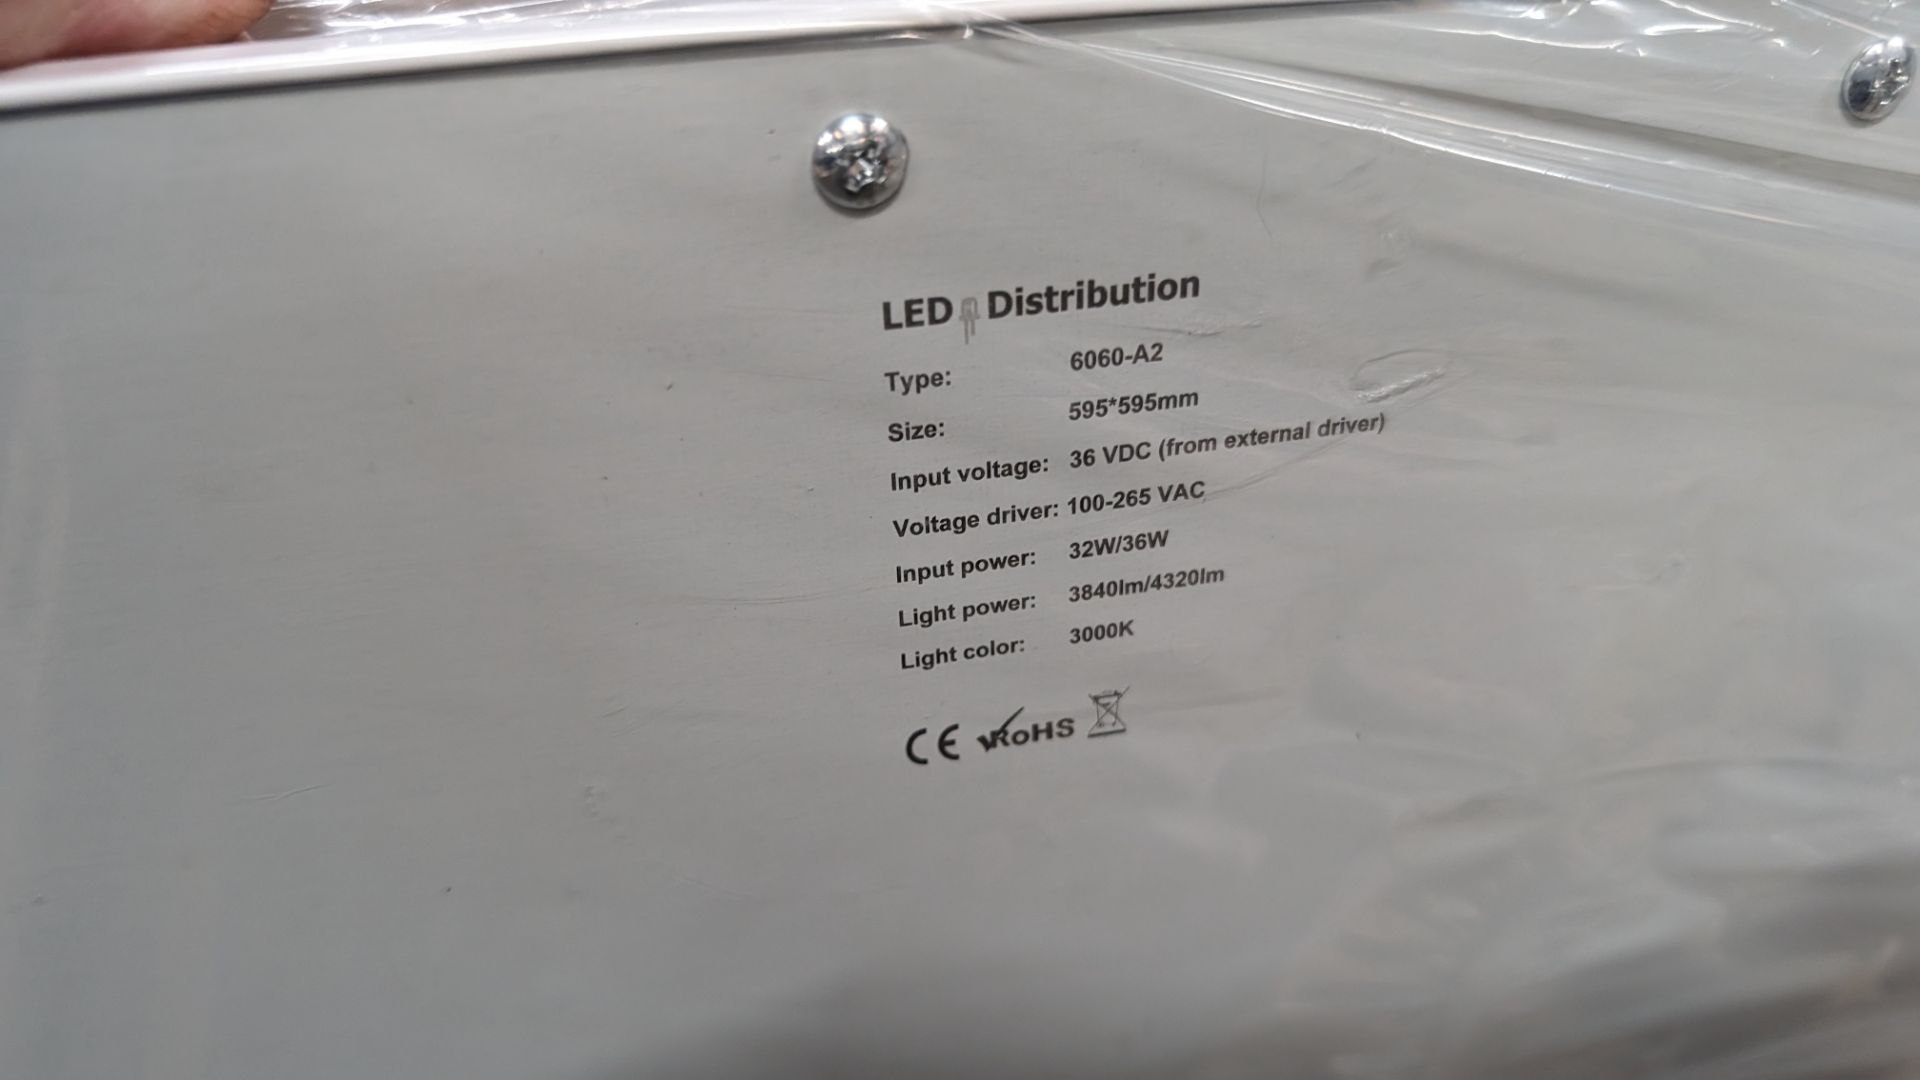 20 off Elegance Premium Eco 595mm x 595mm LED lighting panels. 3000k. 32/36w input power. 36w dri - Image 10 of 14